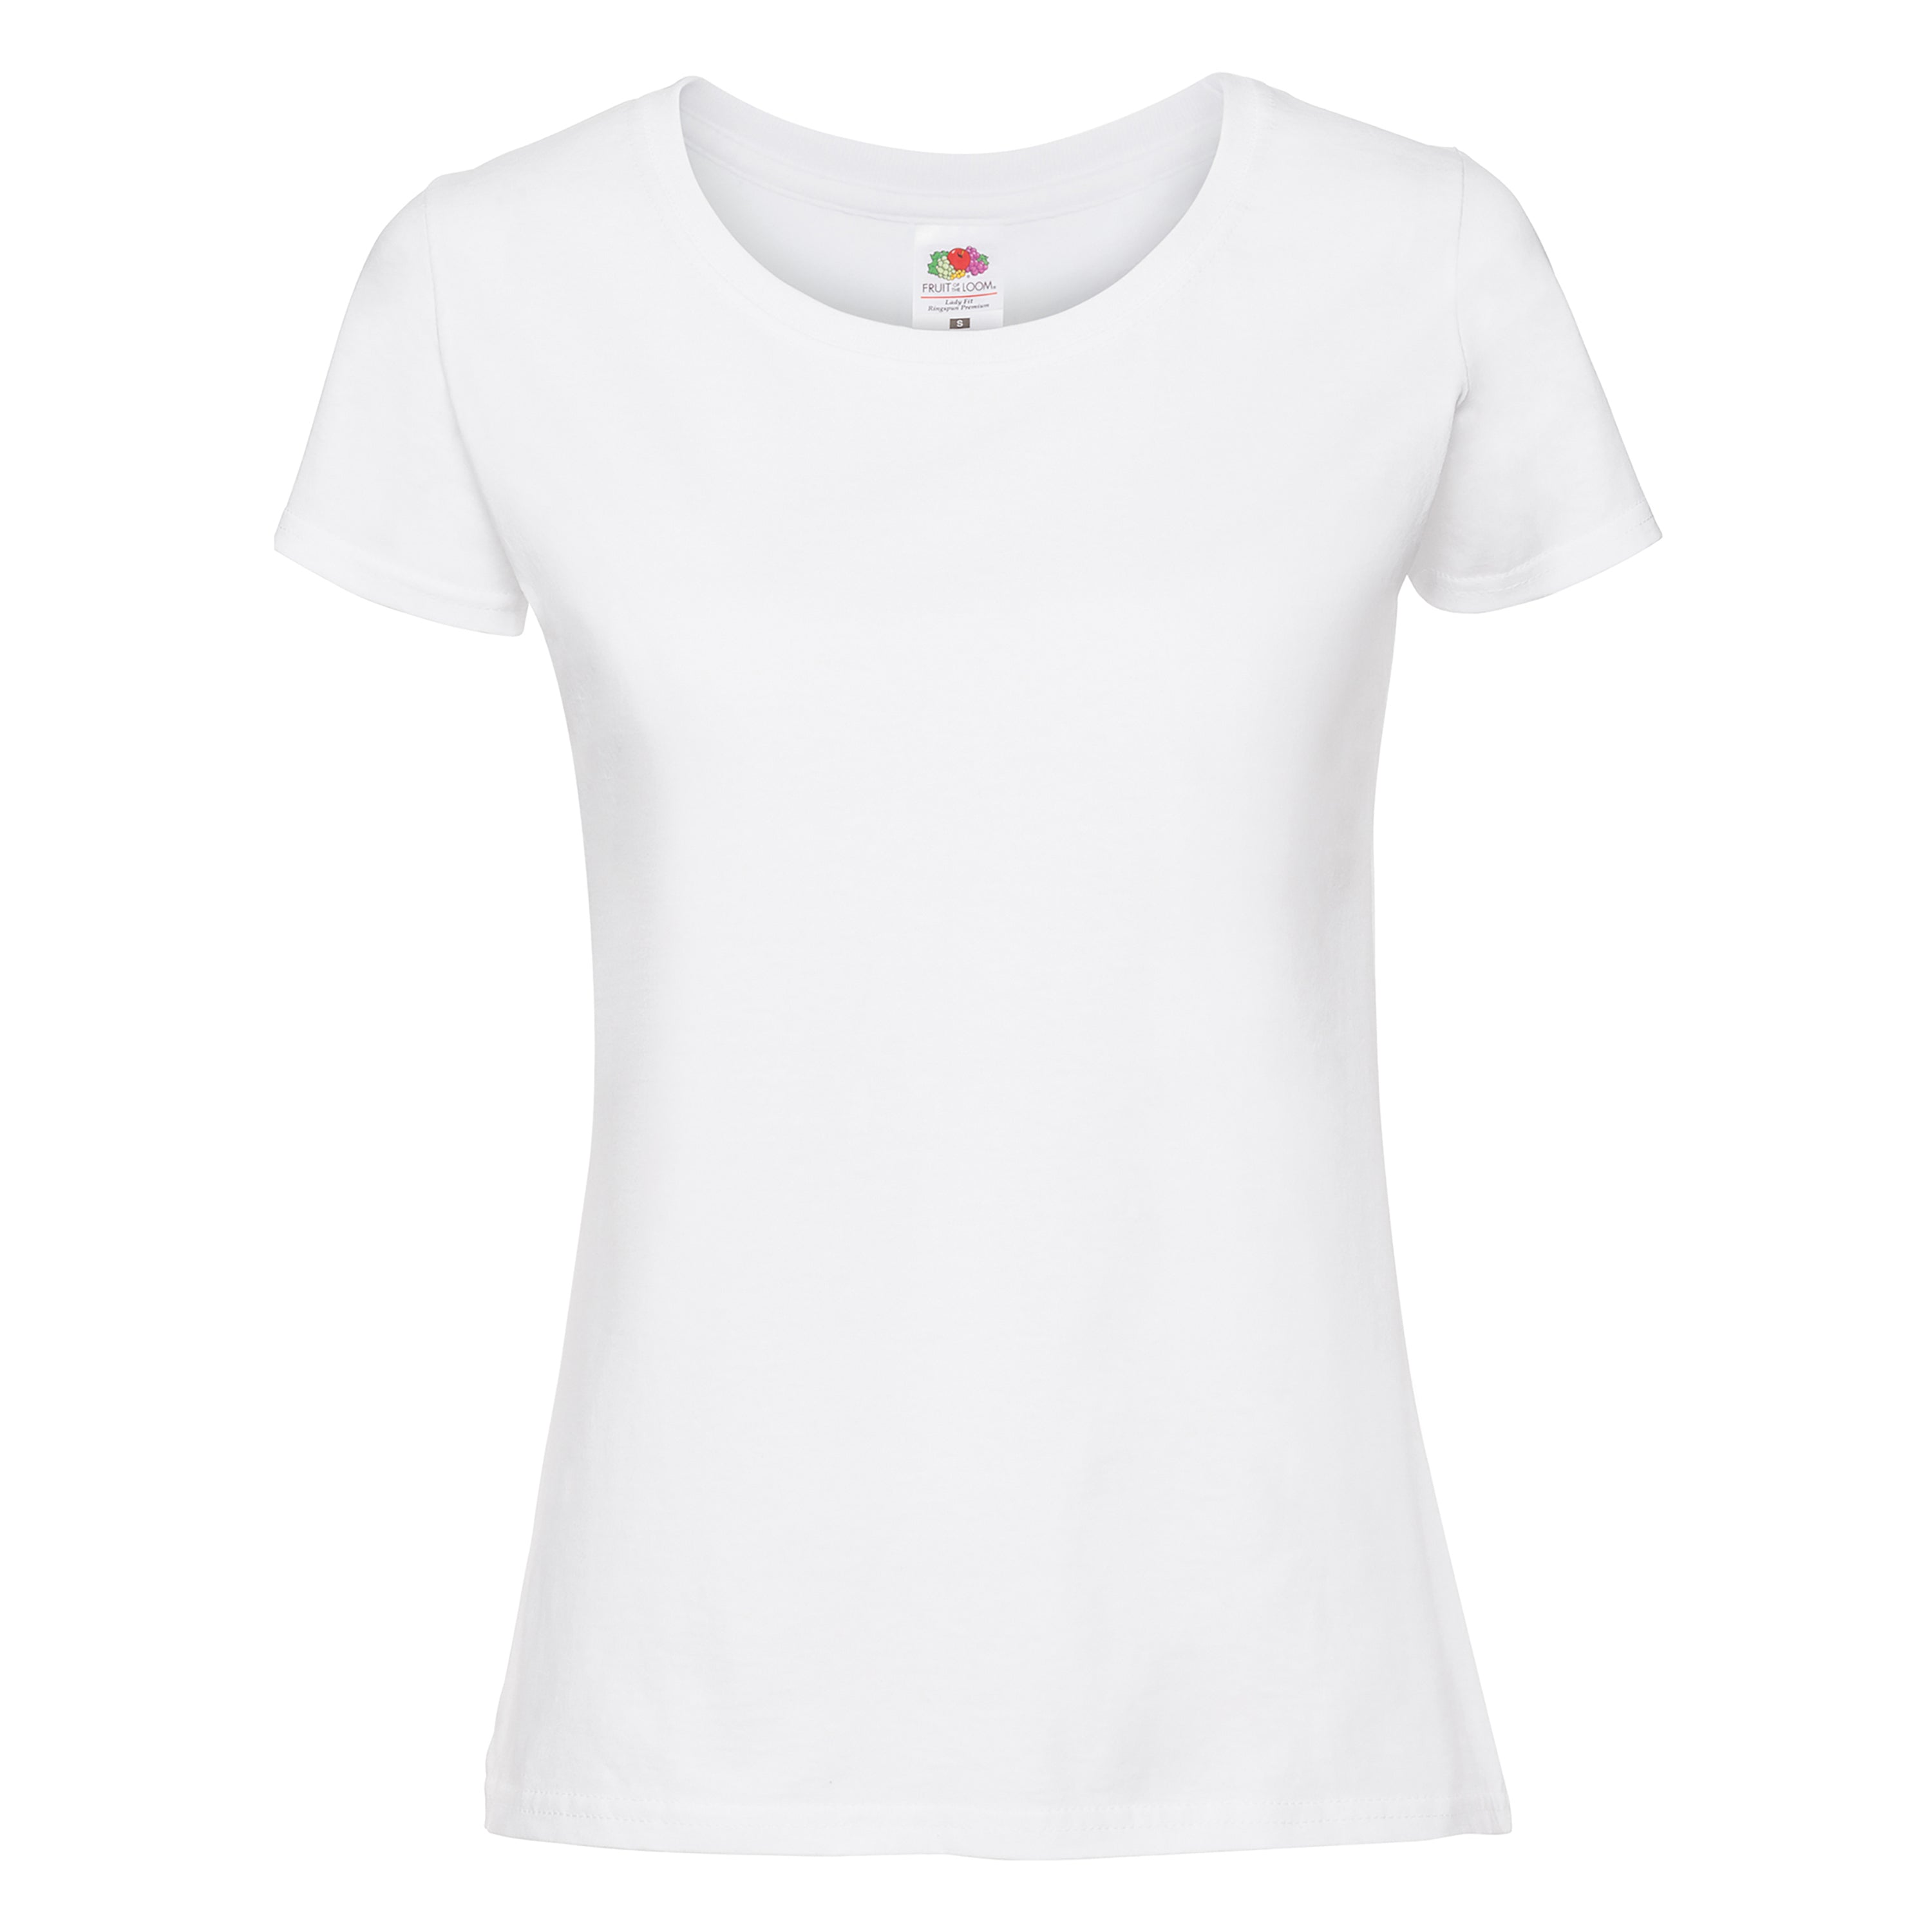 tee shirt femme blanc vierge